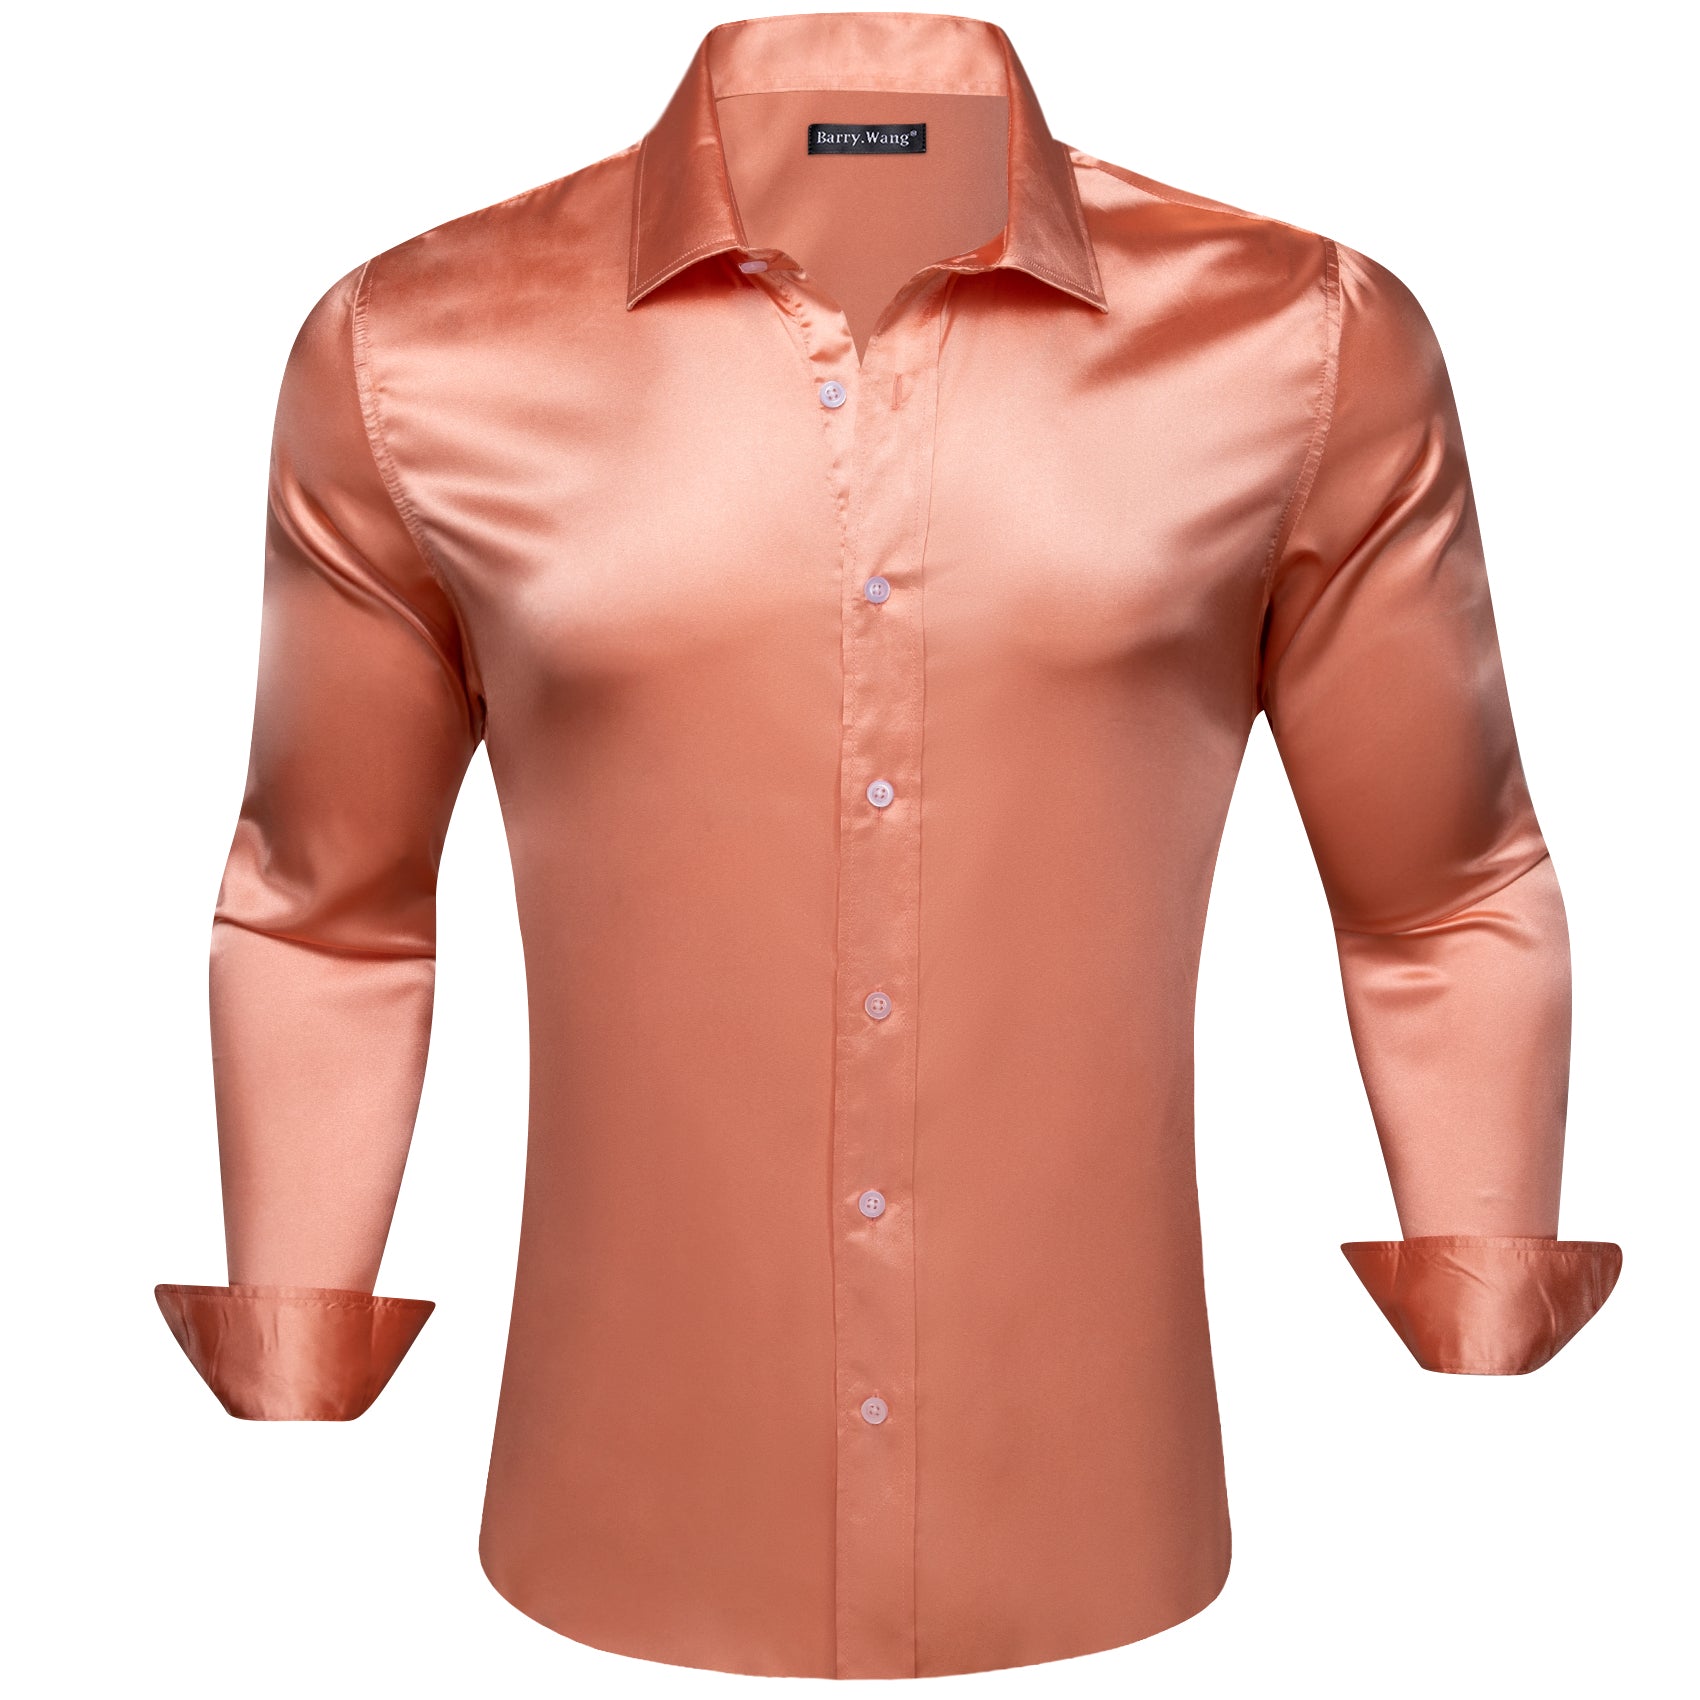 Barry.wang Button Down Shirt Coral Solid Silk Men's Long Sleeve Shirt